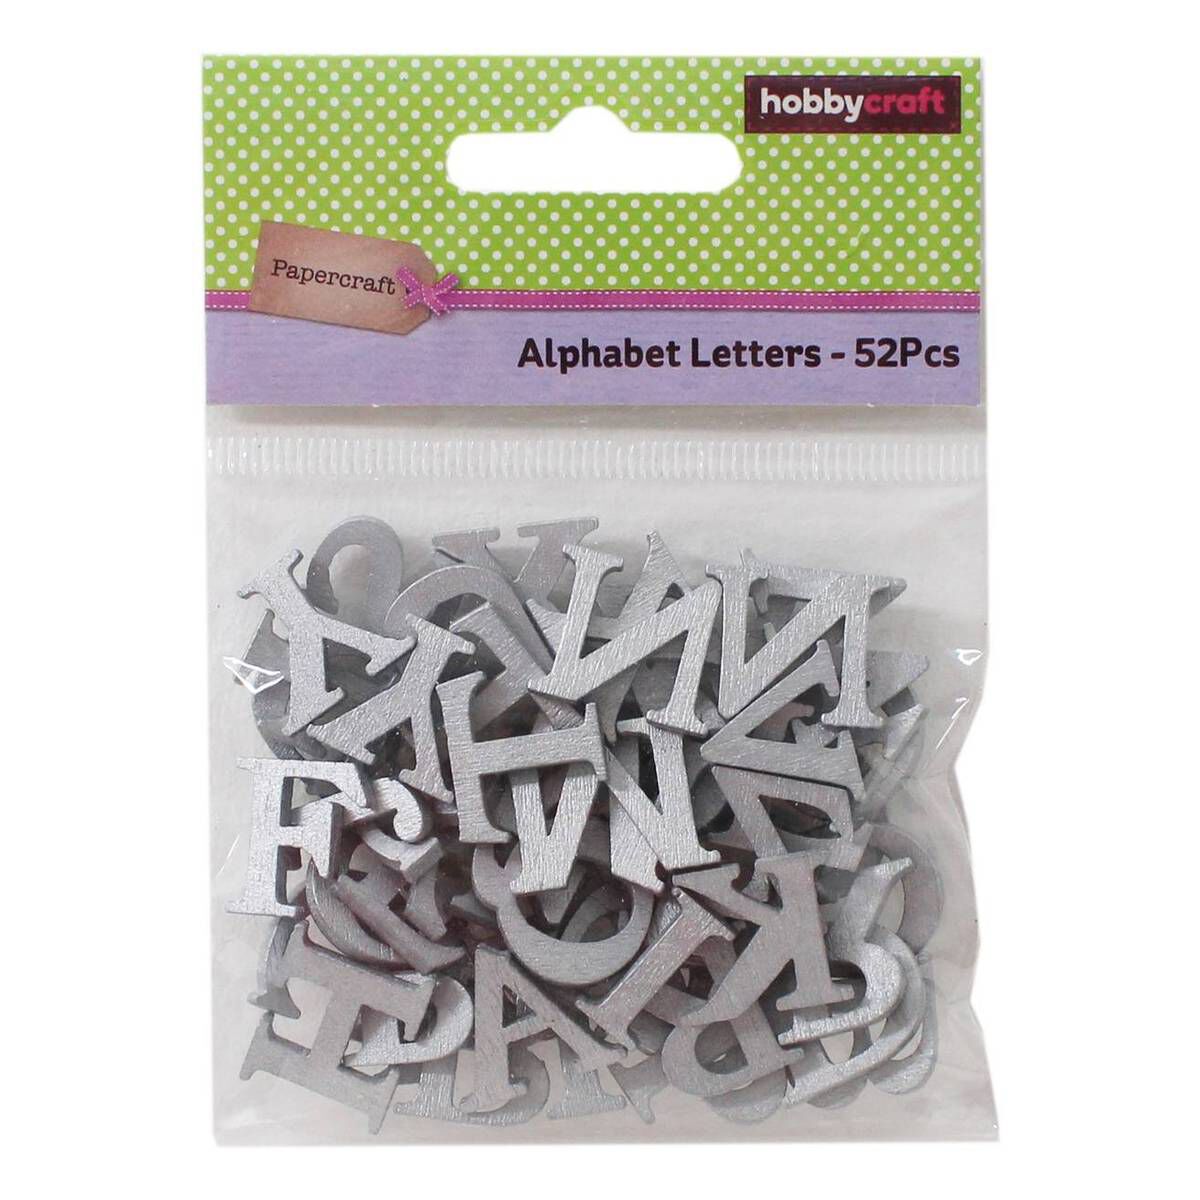 Papercraft Letter & Number Embellishments